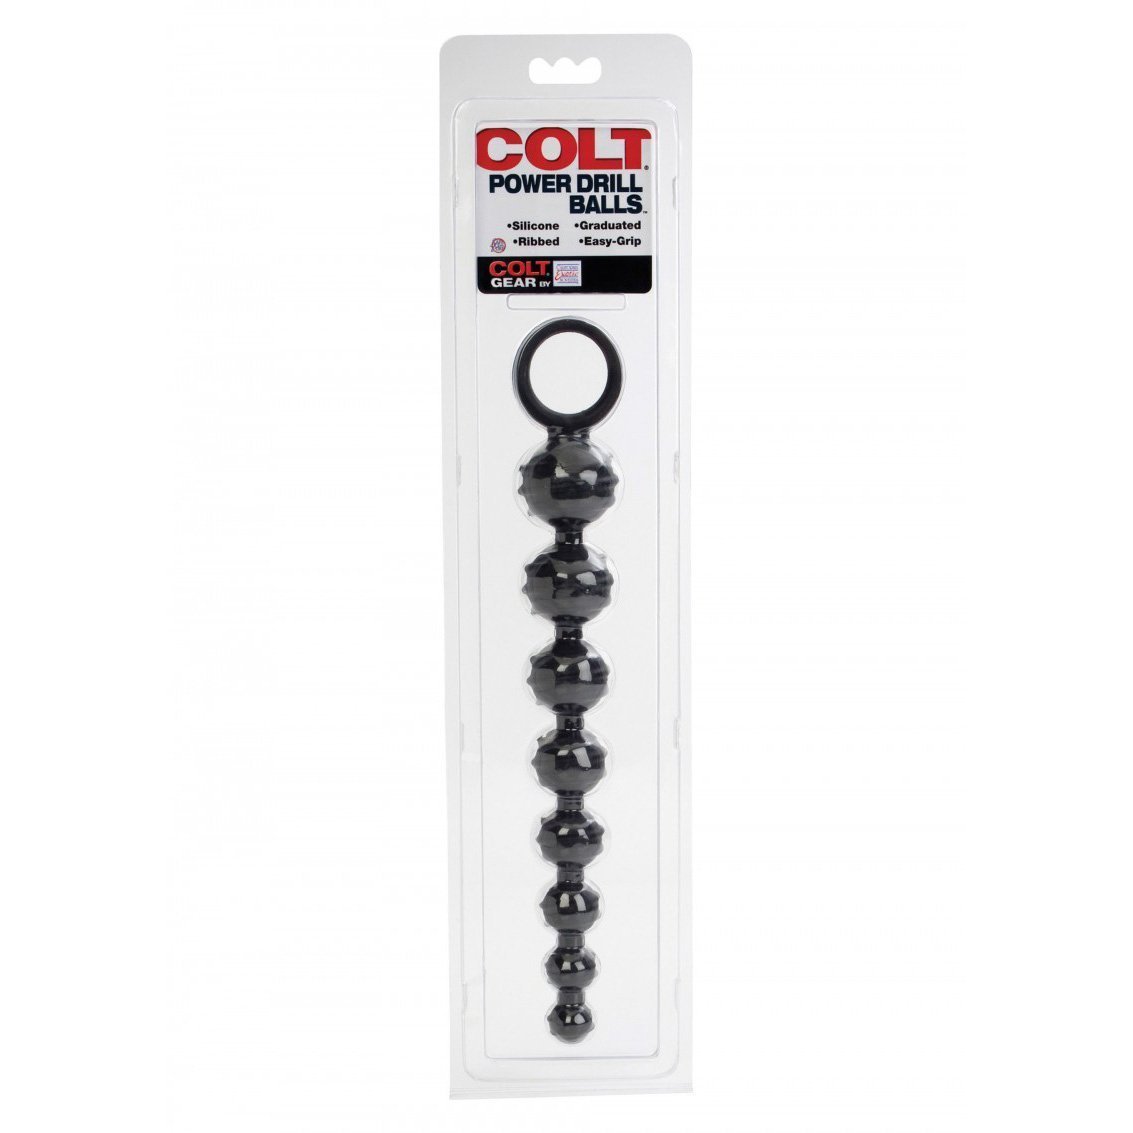 Colt - Power Drill Balls Anal Beads (Black) -  Anal Beads (Non Vibration)  Durio.sg